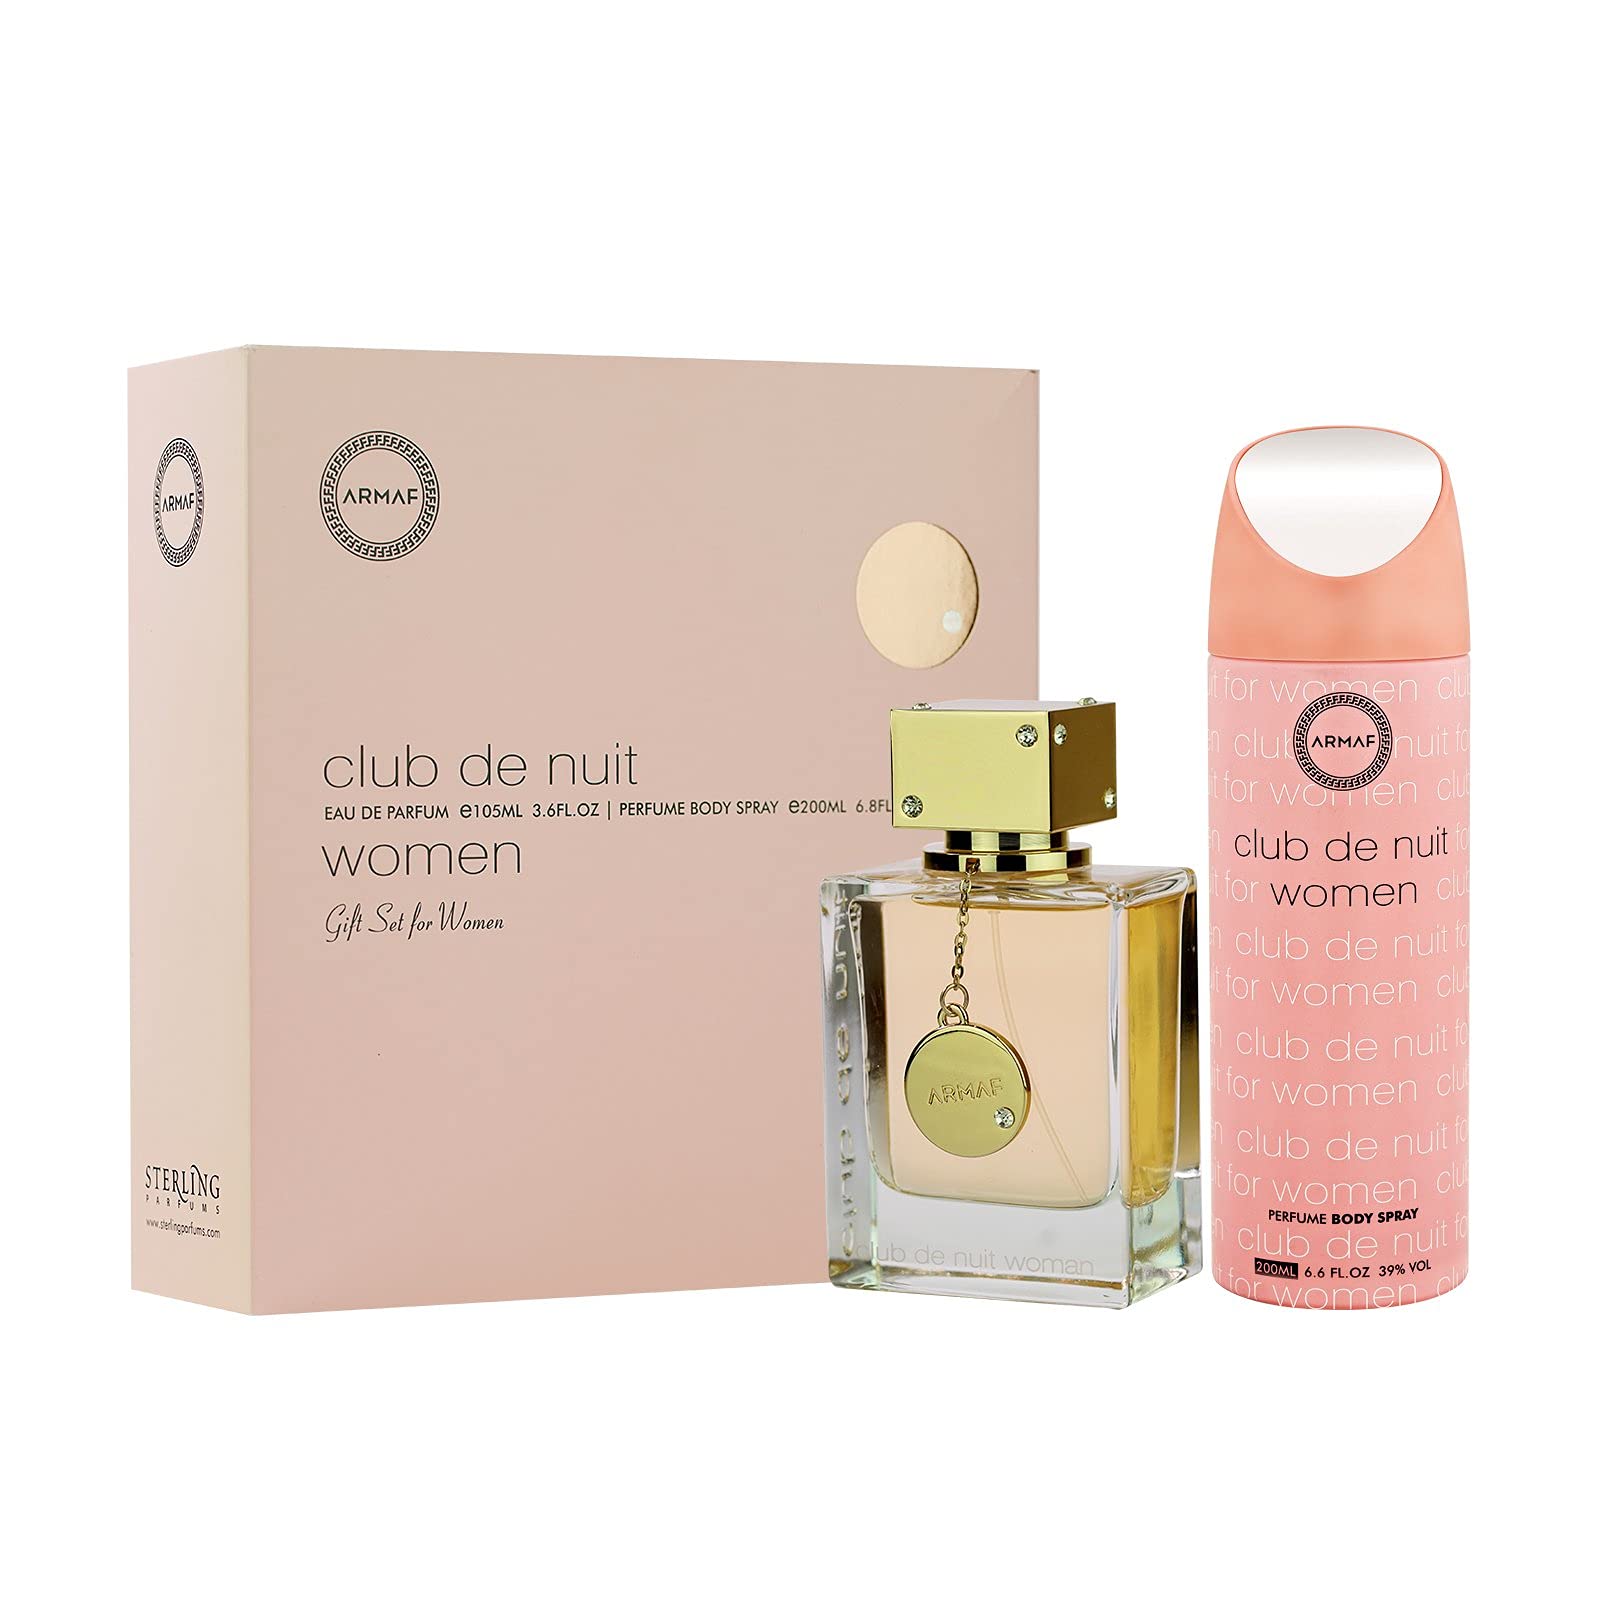 armaf club de nuit classic (pink) 2pcs gift set - 105ml edp spray + 200ml perfume body spray (women)